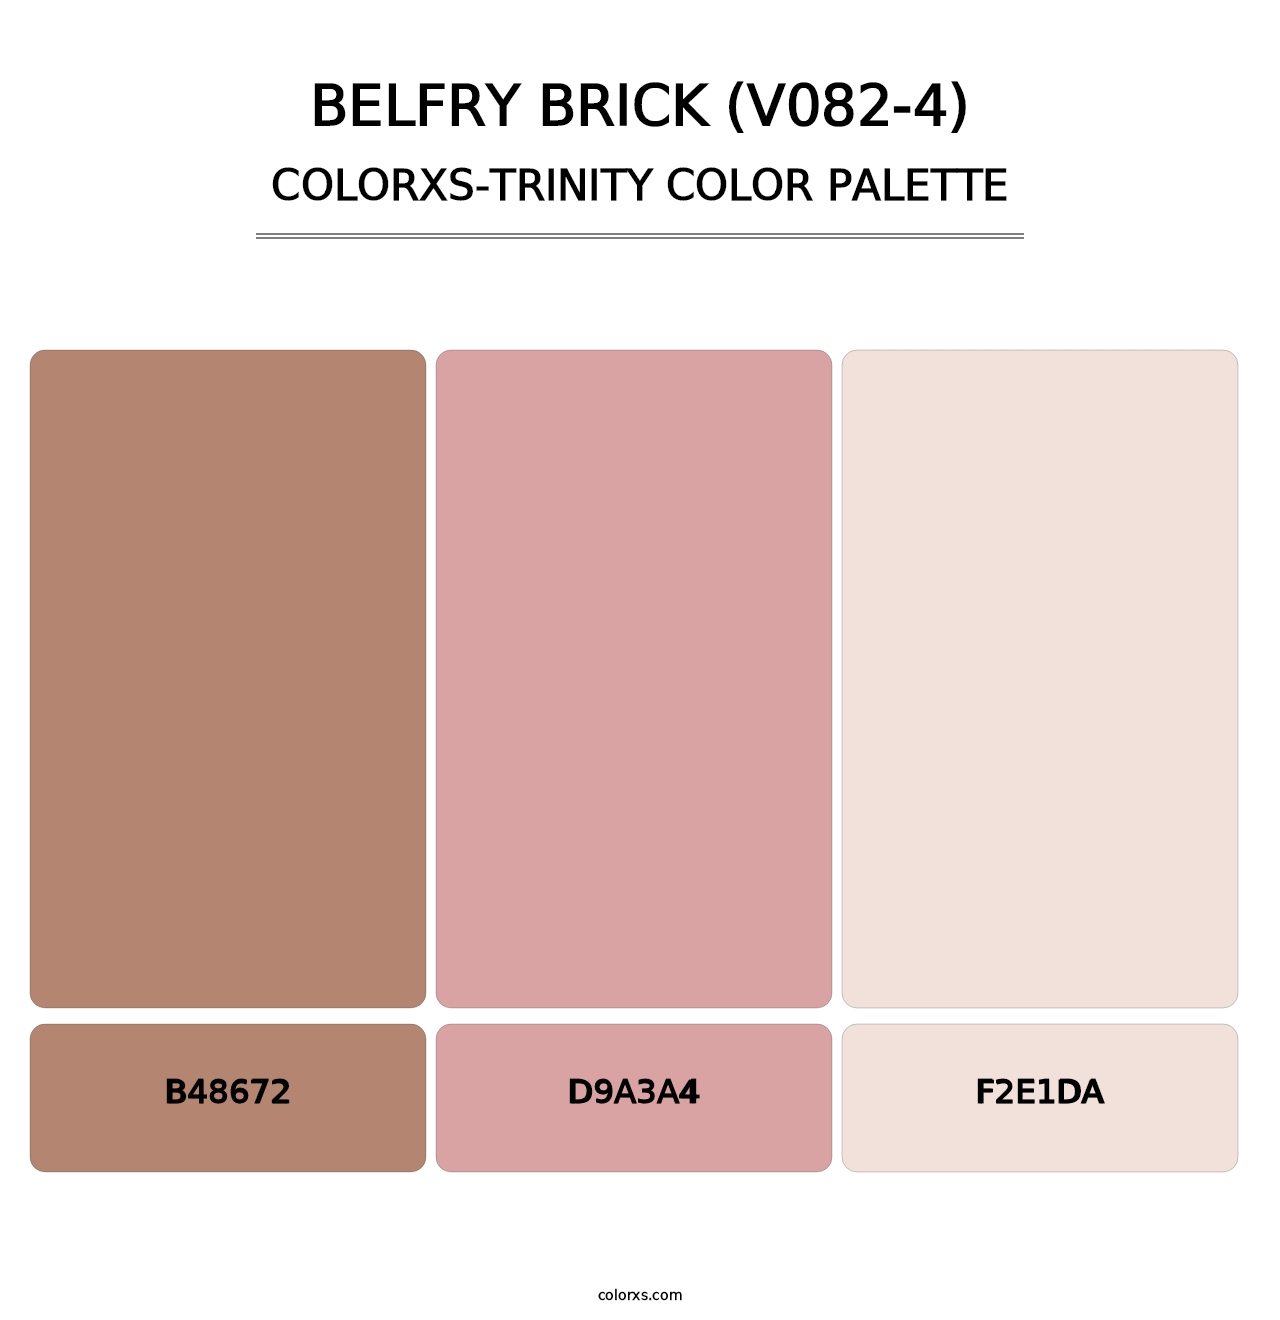 Belfry Brick (V082-4) - Colorxs Trinity Palette